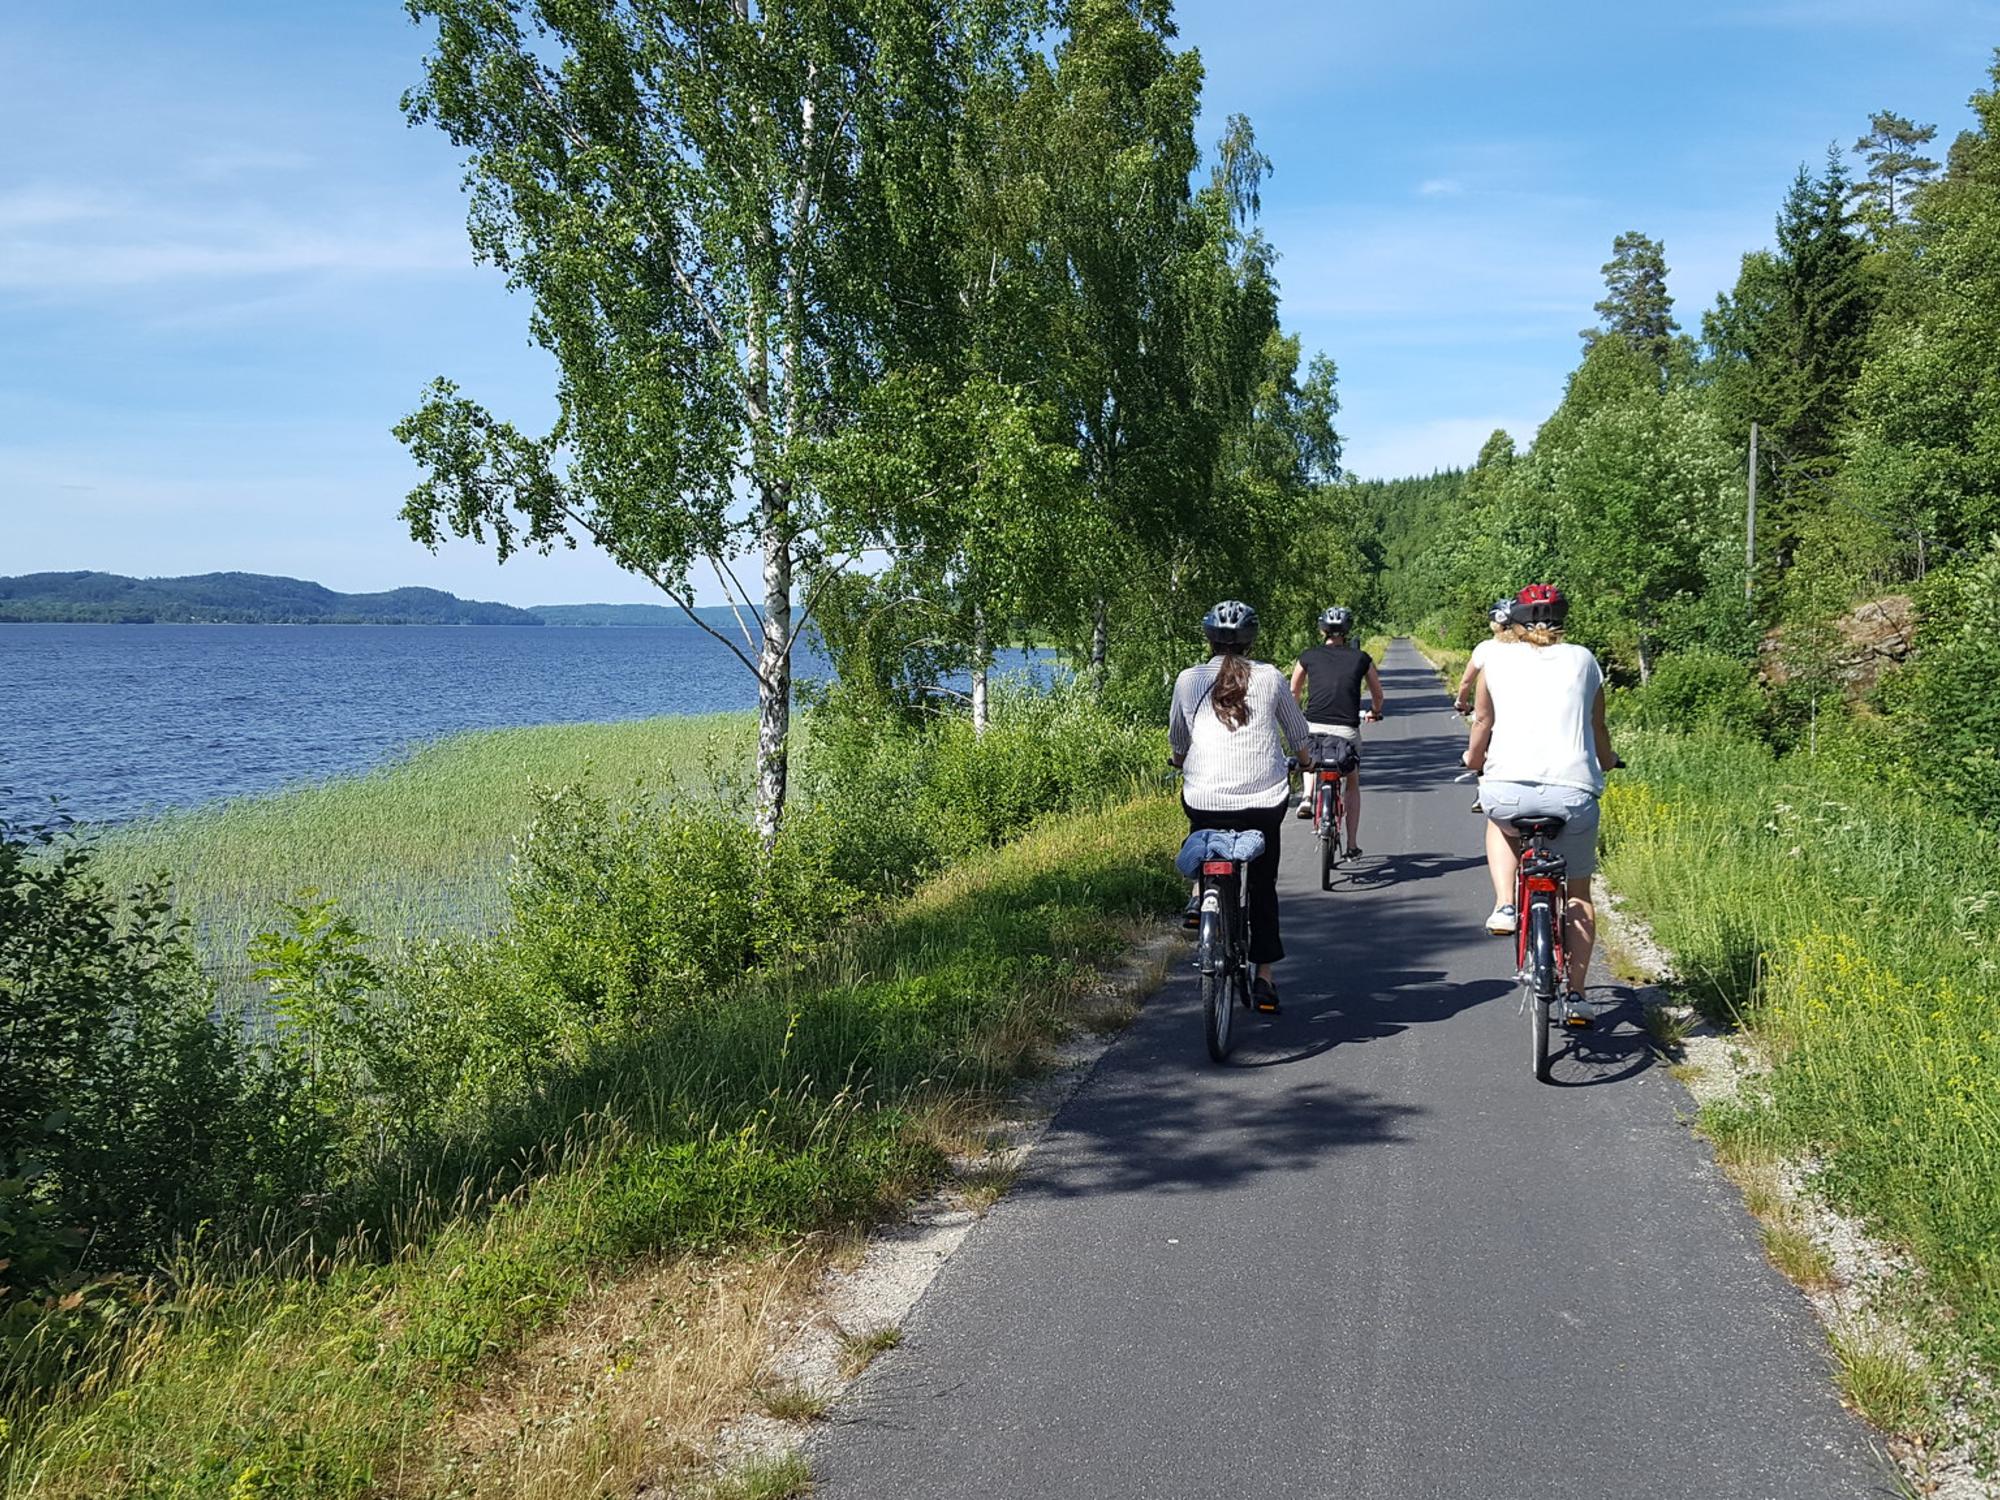 Radfahrer auf dem Radweg entlang des Sees